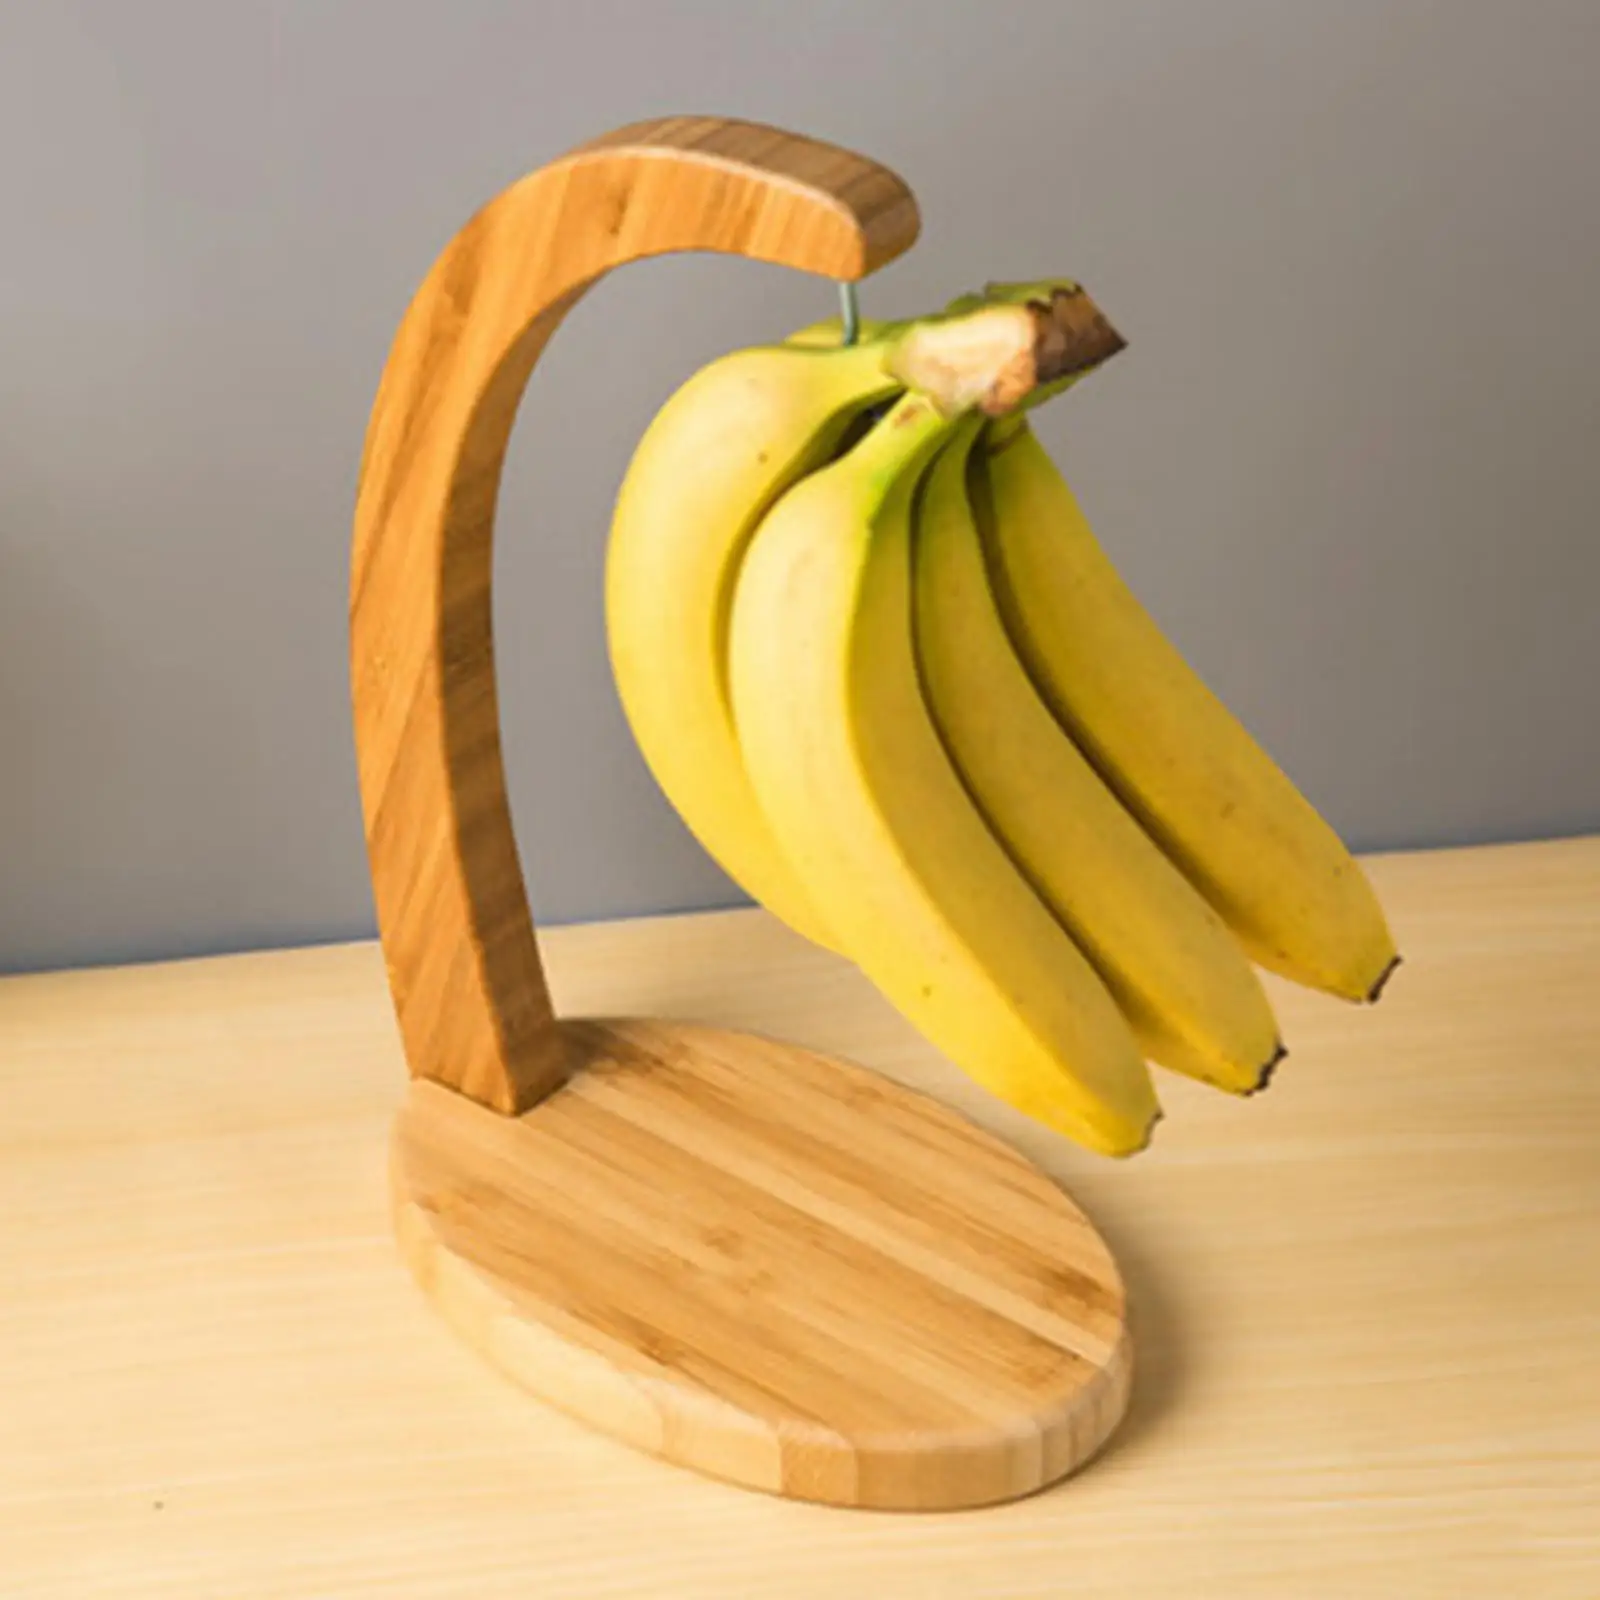 Banana Hanger for Kitchen Countertop, Kitcken Organizer- Bamboo Wood and Rust Resistance Metal Hook